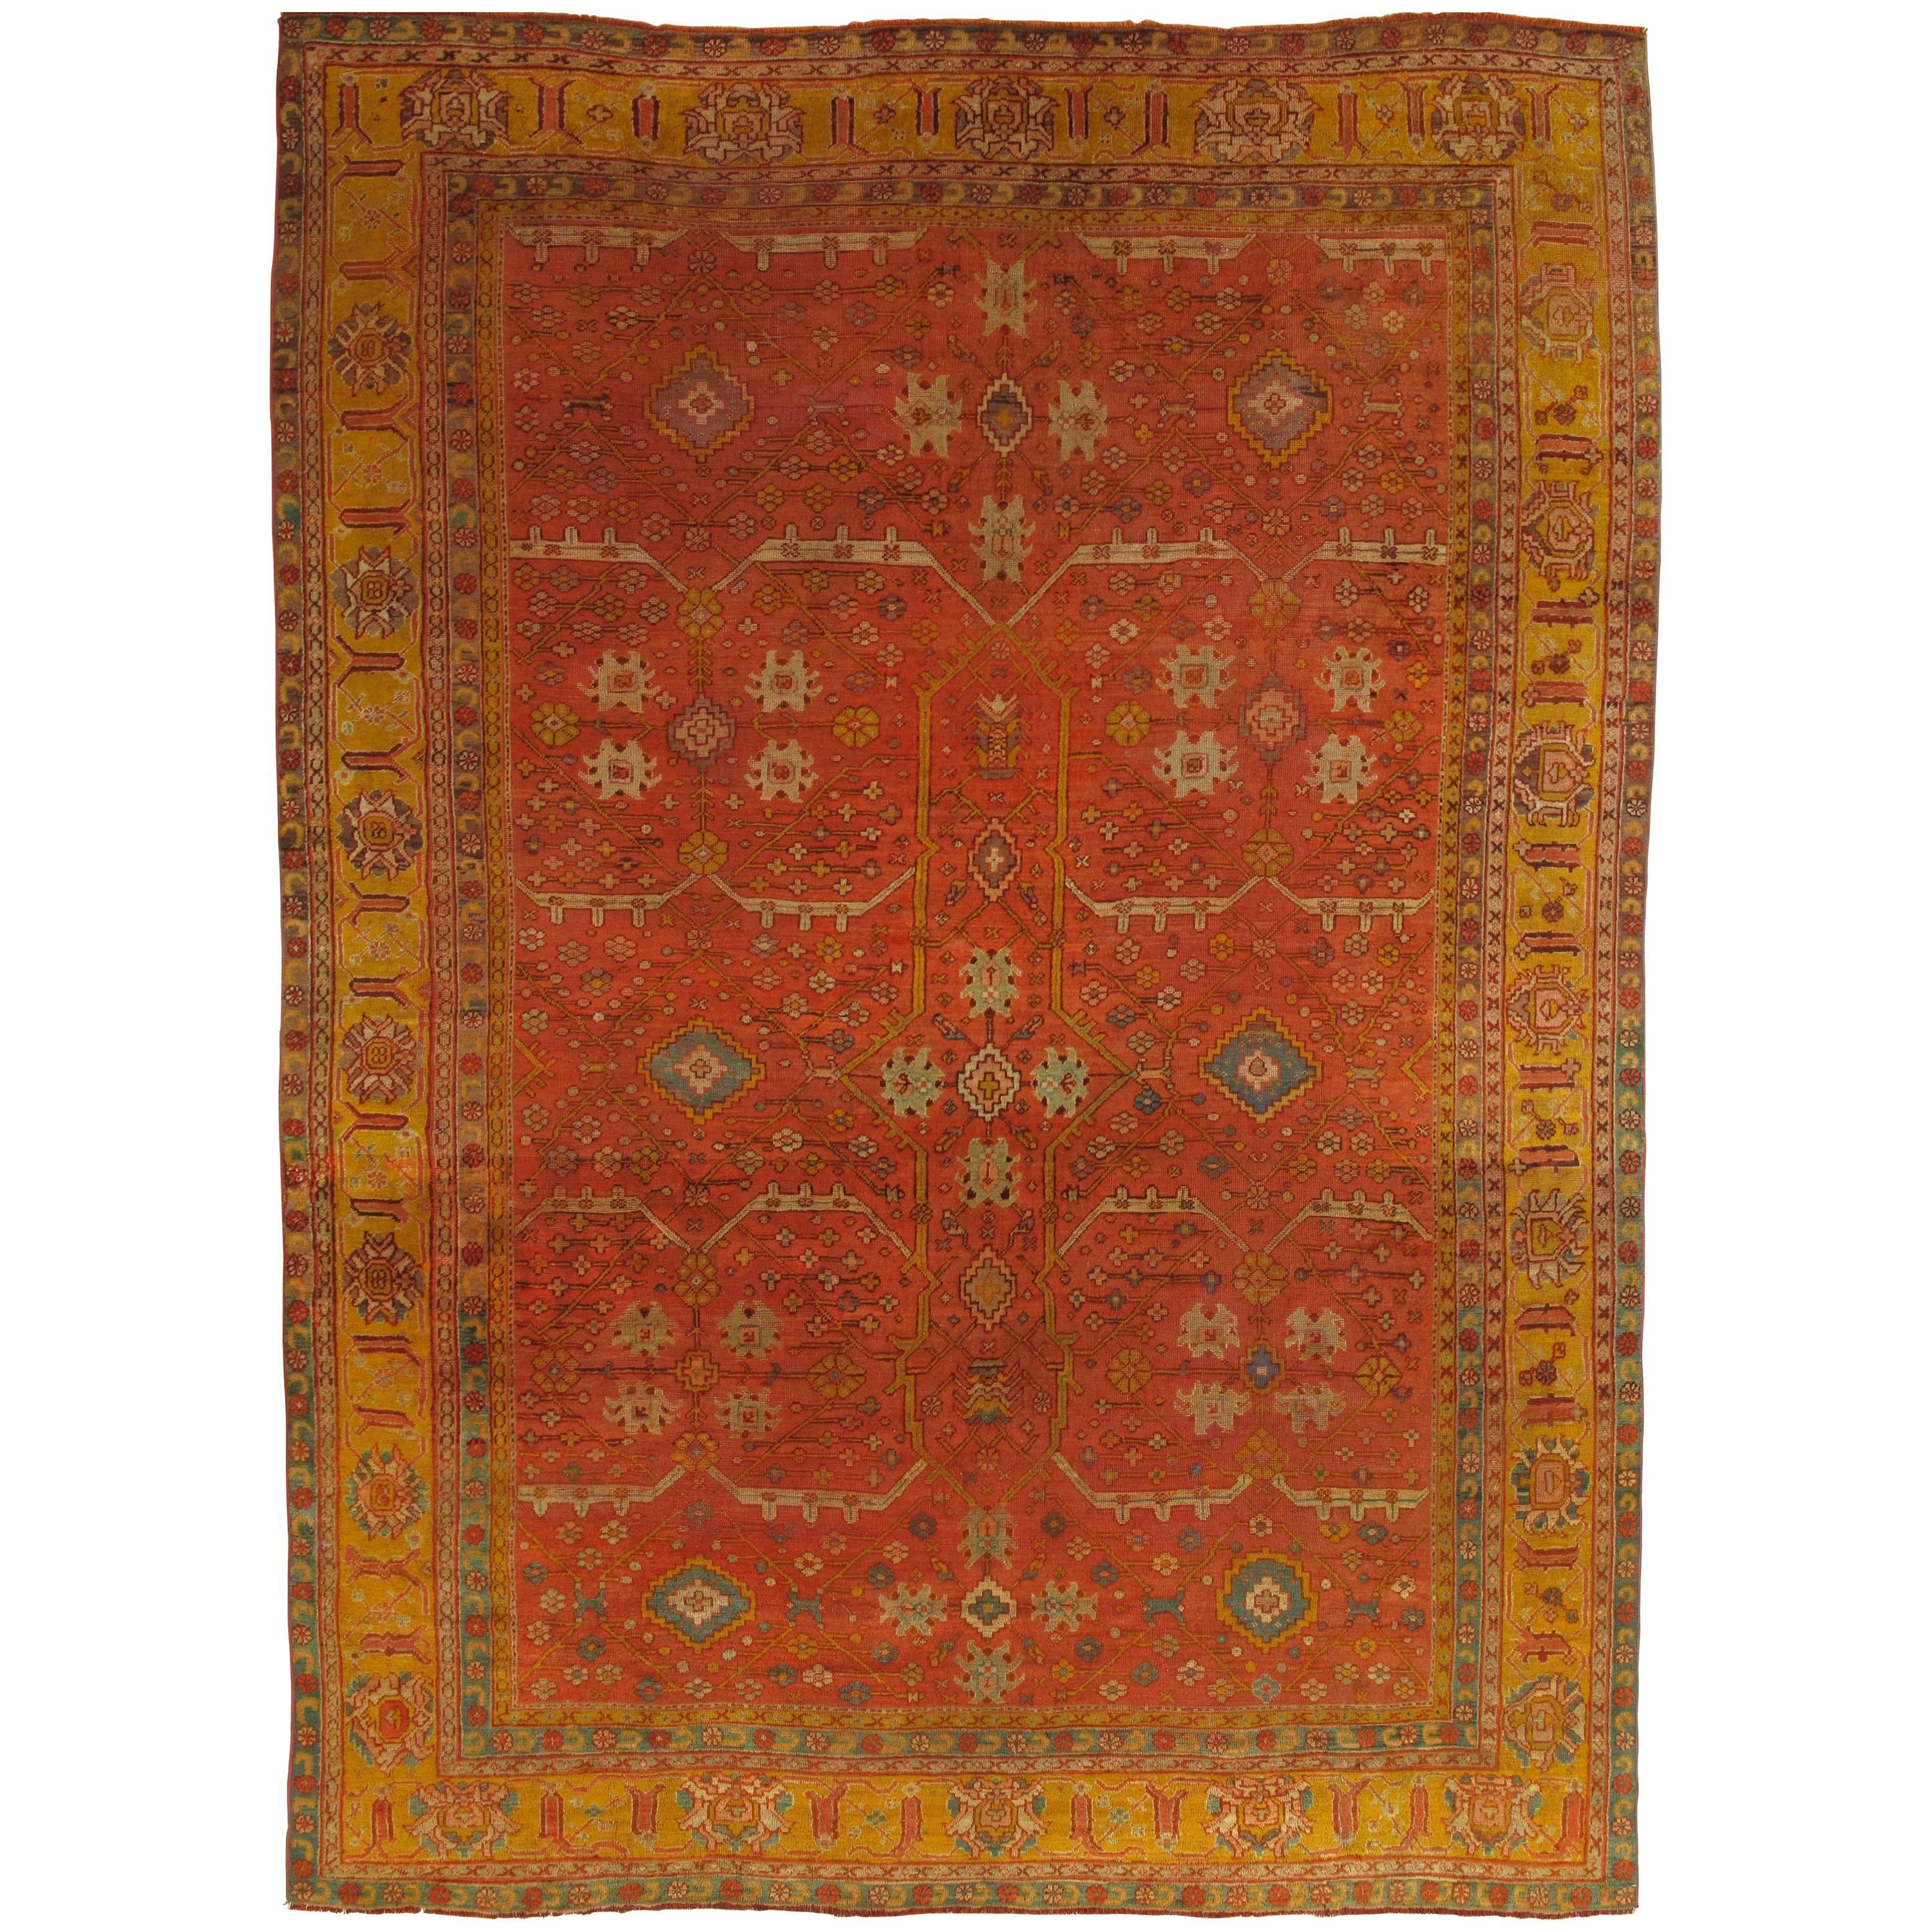 Antique Oushak Carpet, Oriental Rug, Handmade Ivory, Muted Orange, Soft Saffron